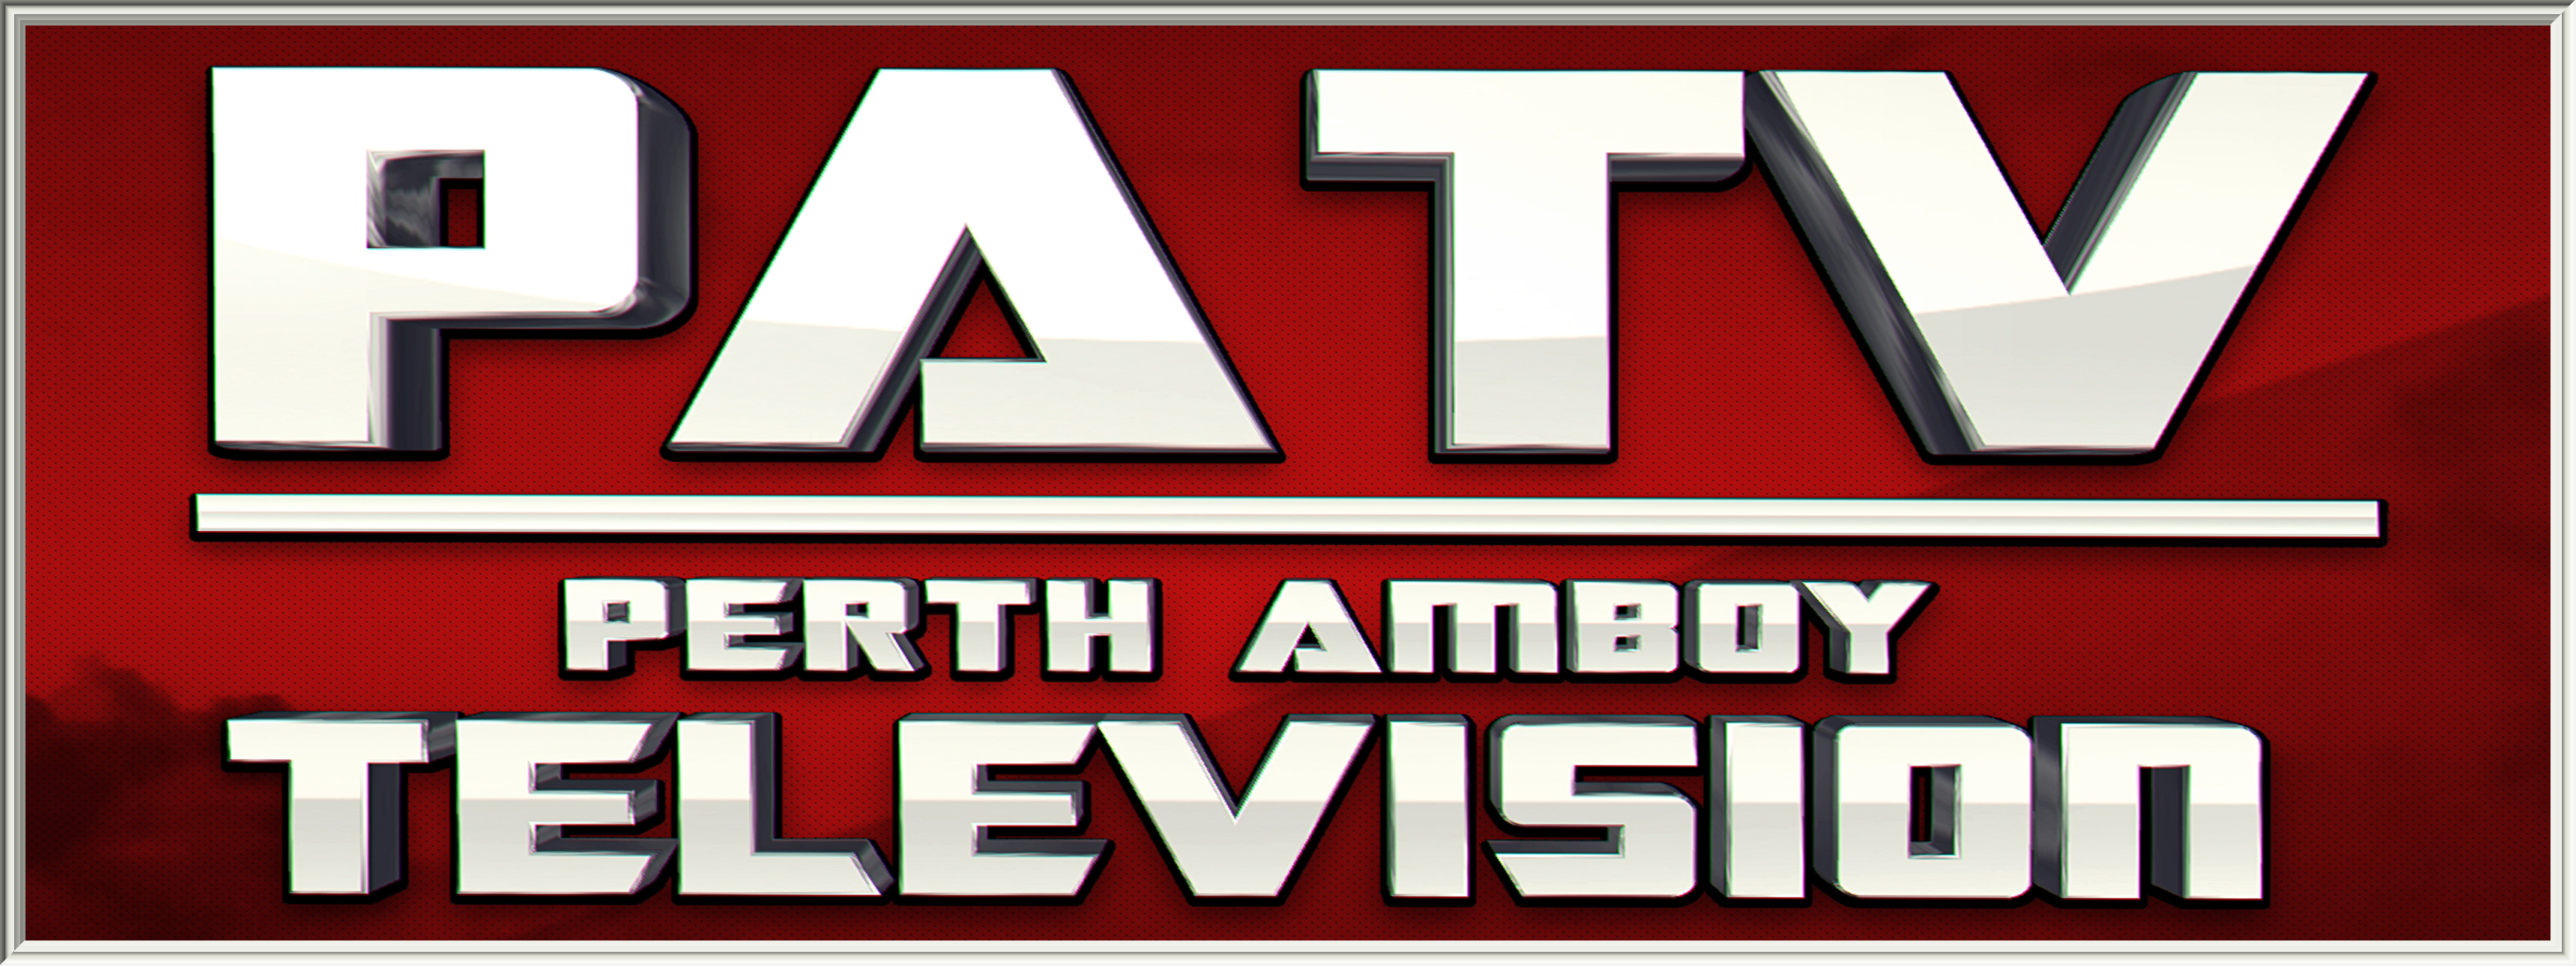 Perth Amboy Television  (PATV) - Perth Amboy Television (PATV) - organization logo